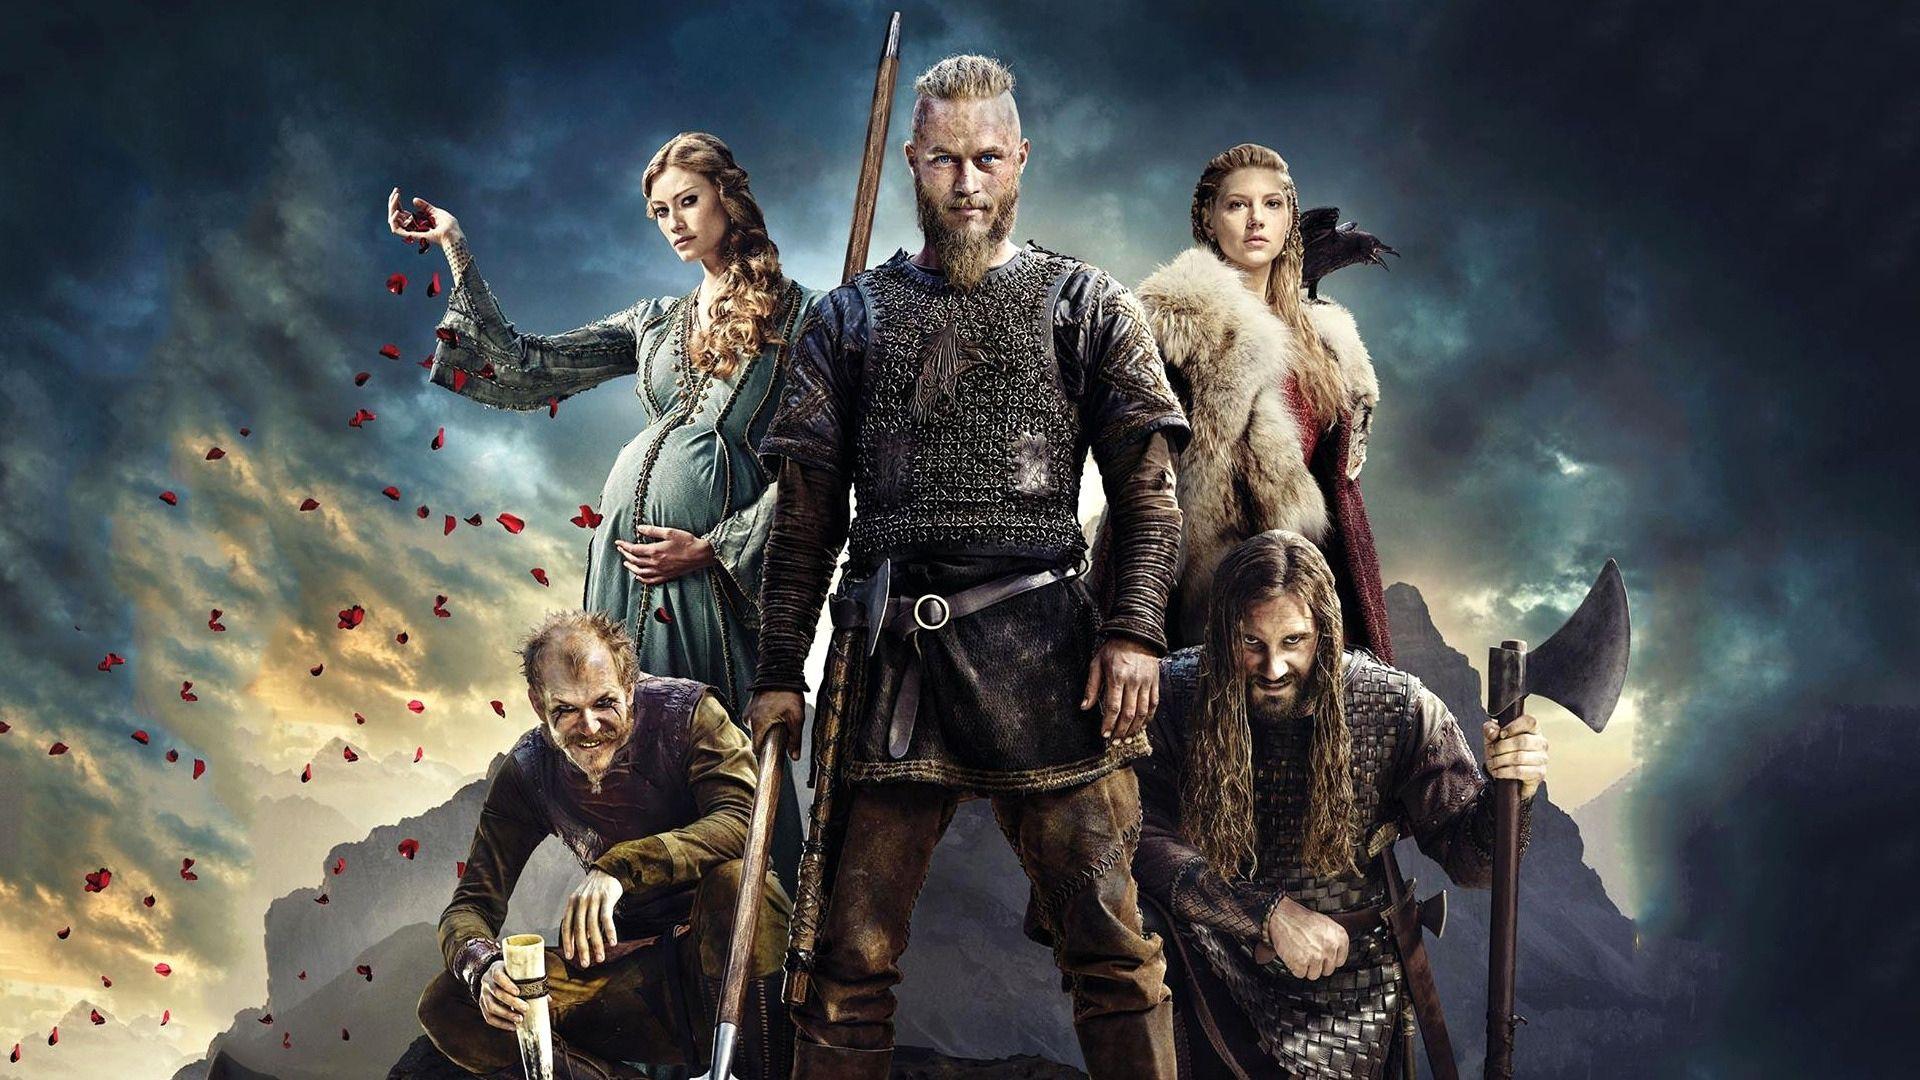 Vikings of Tv Show Tier List